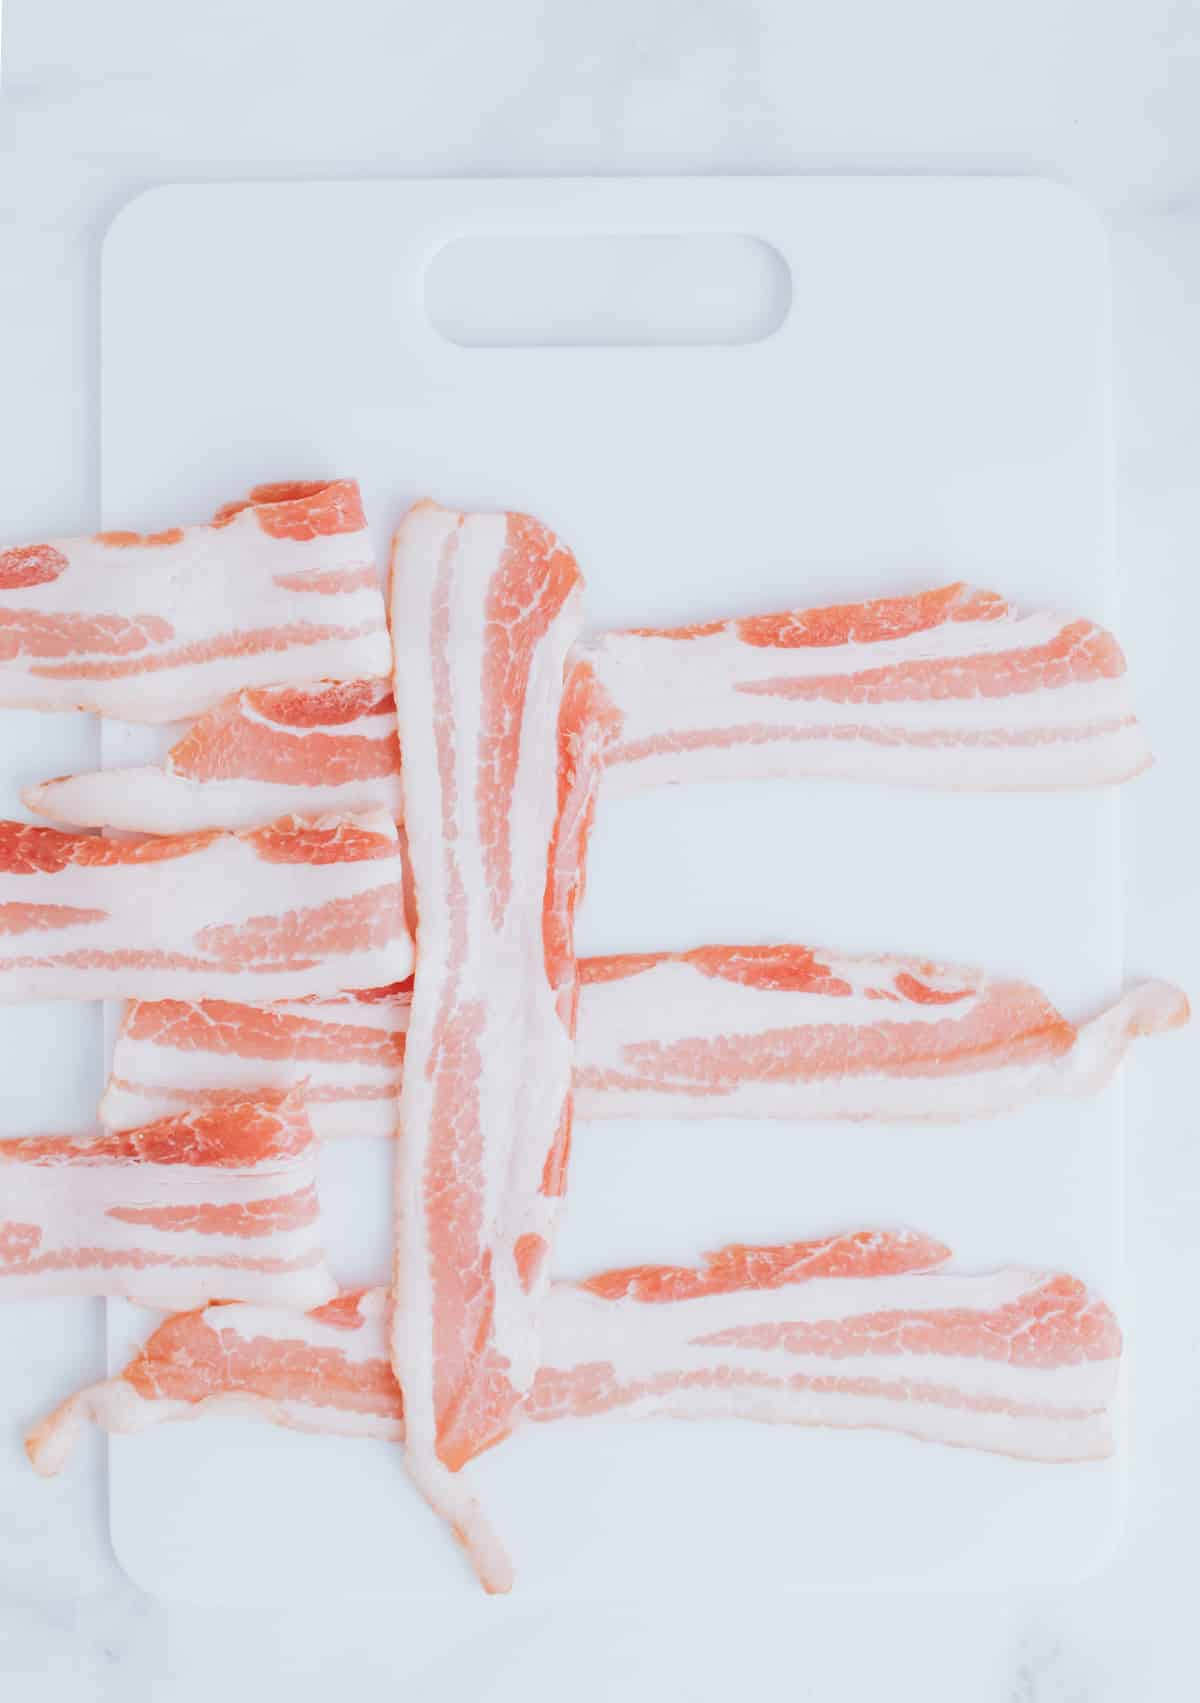 folding strips of bacon on a cutting board